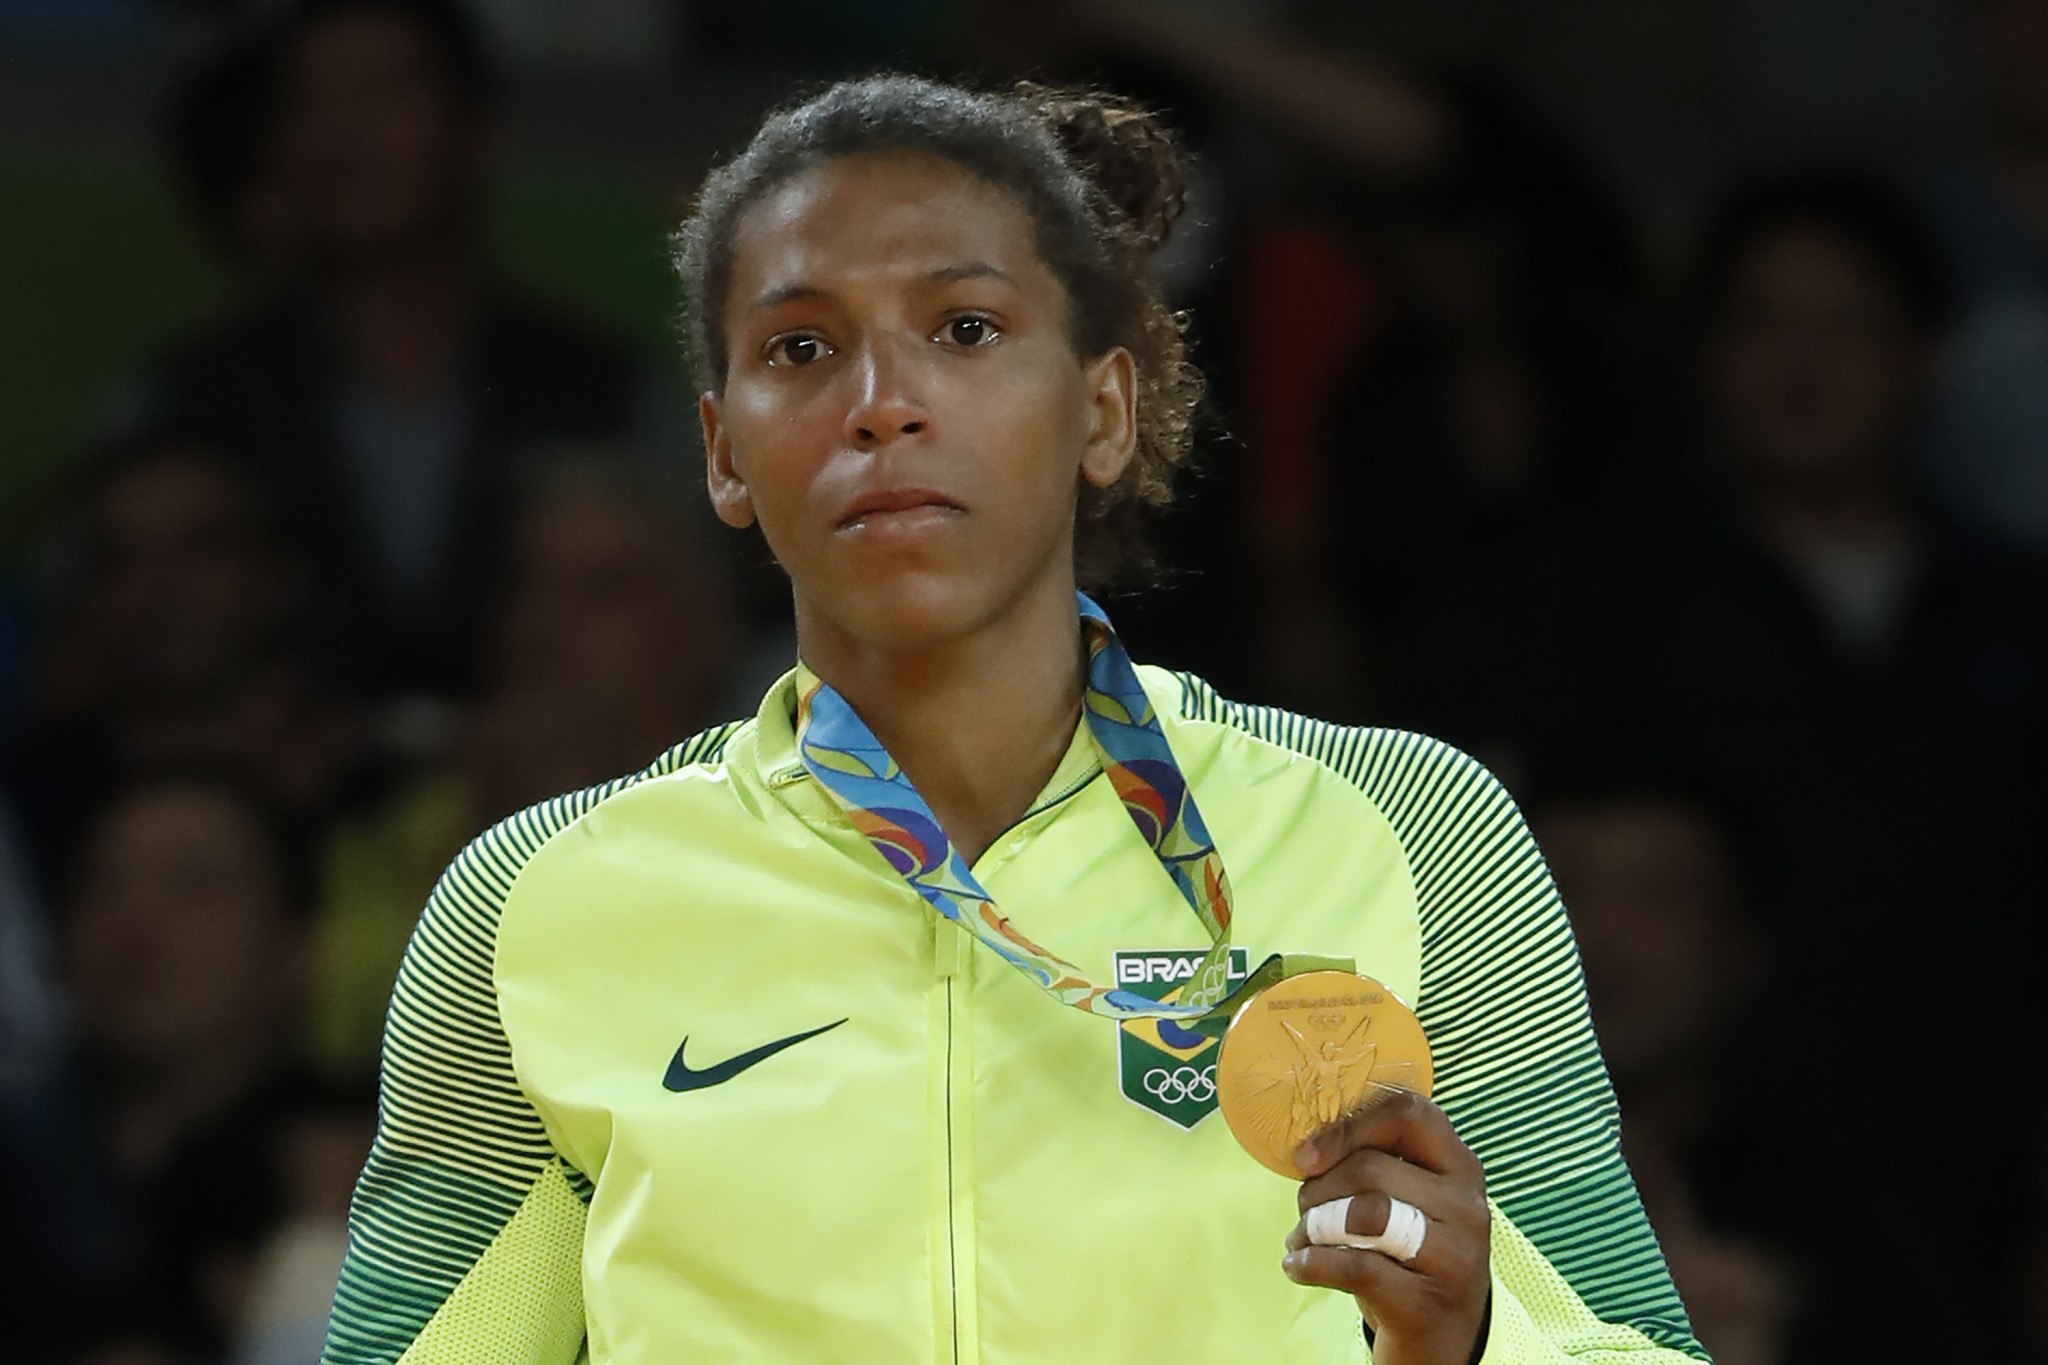 Rafaela Silva won Brazil's first gold medal of Rio 2016 ©Getty Images